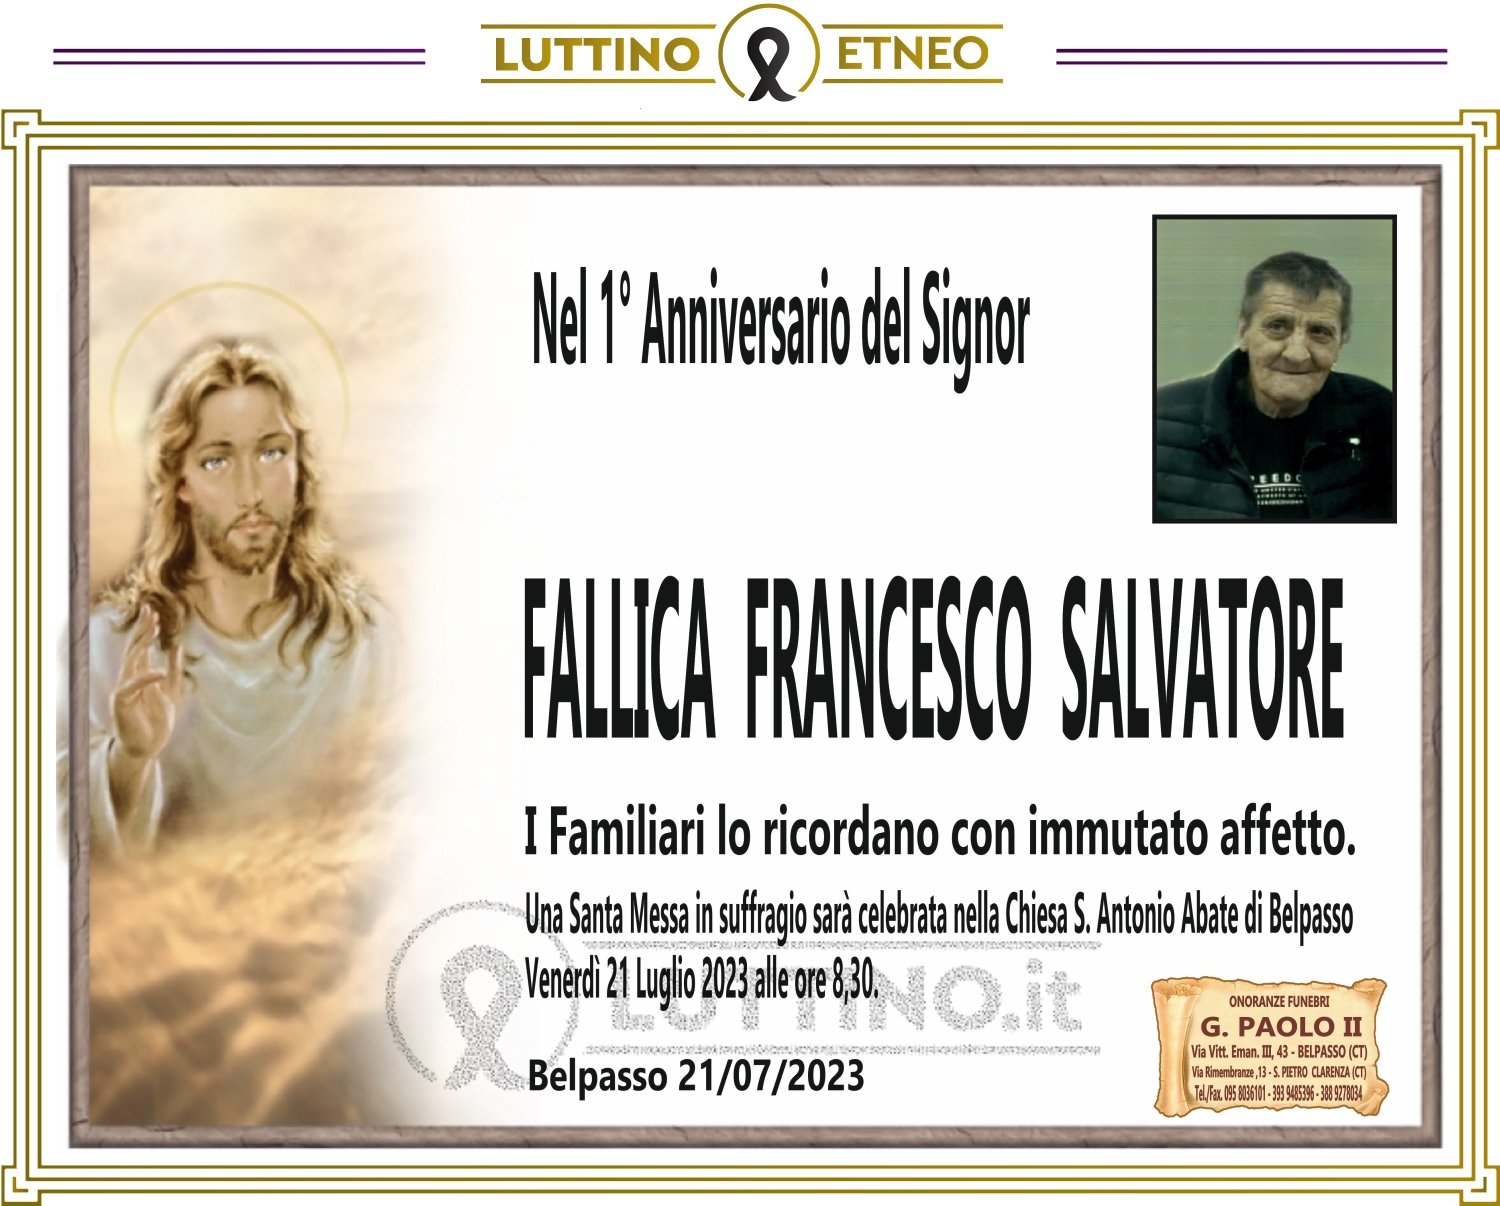 Francesco Salvatore Fallica